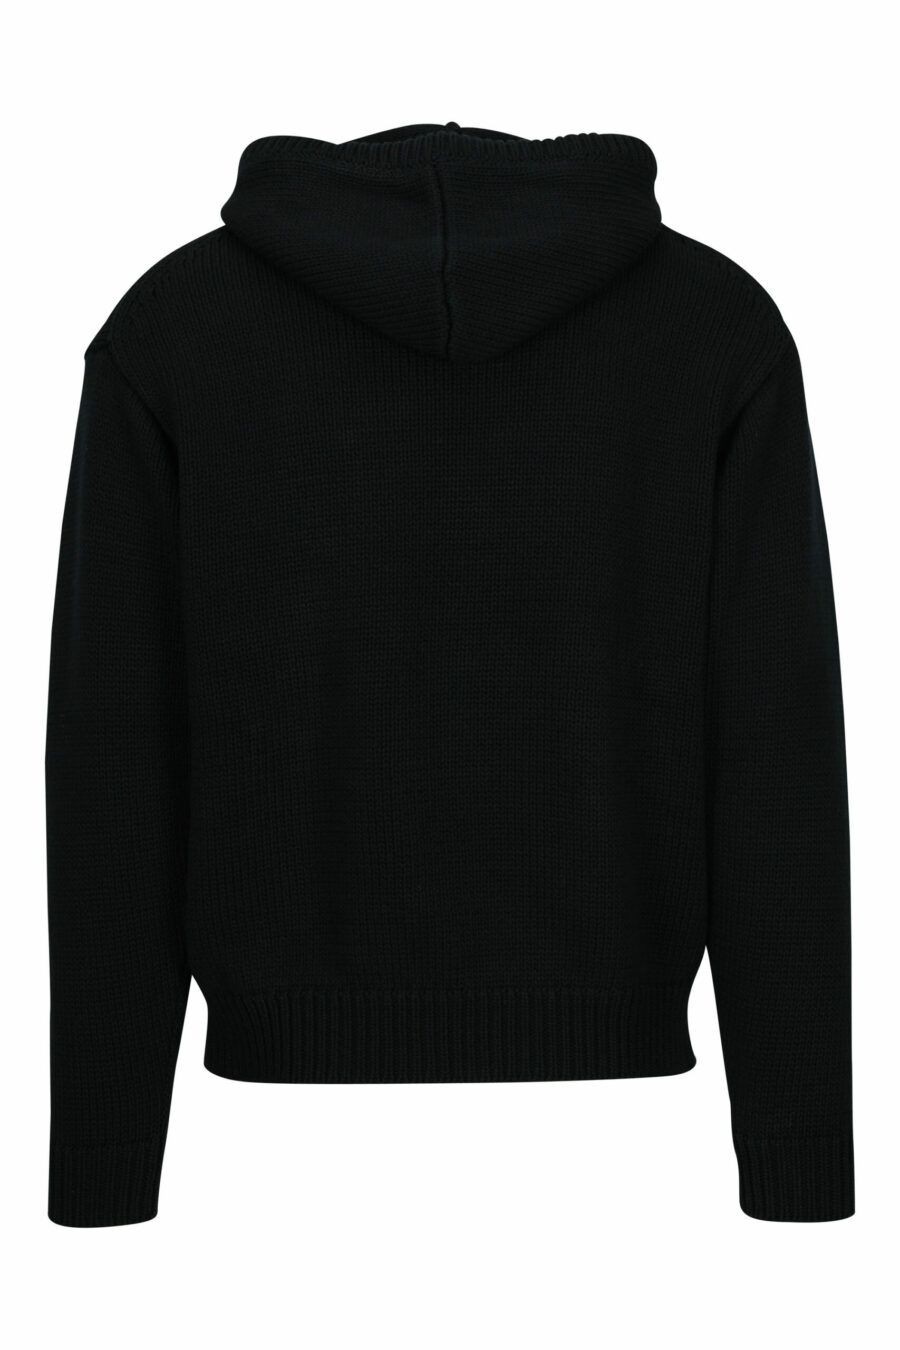 Black hooded sweatshirt with maxilogo "kenzo by verdy" - 3612230610057 1 scaled